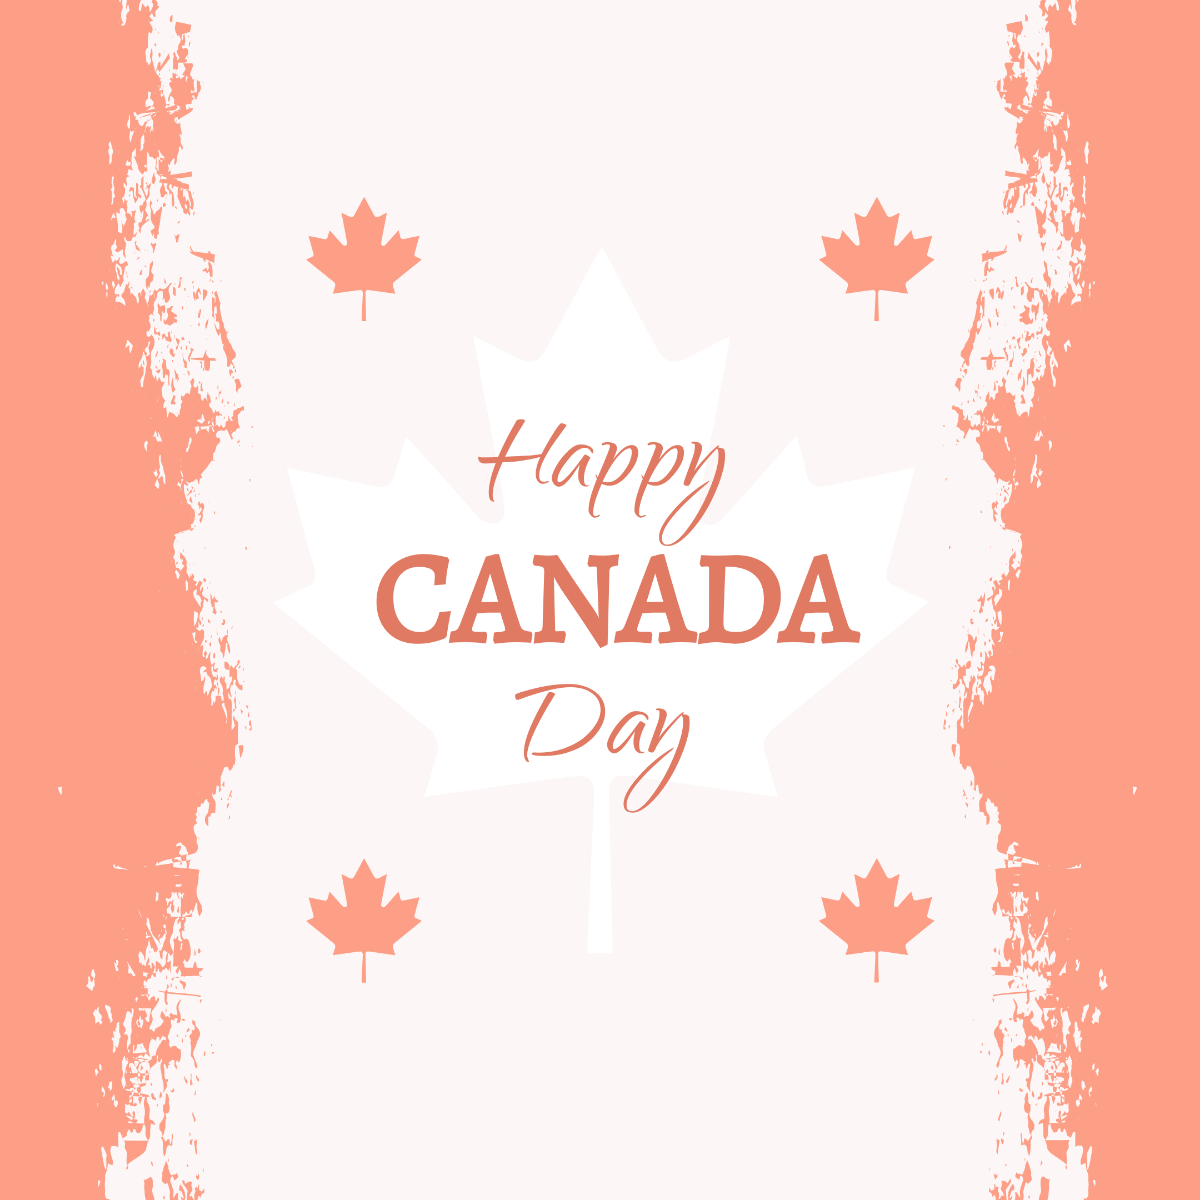 Rustic Happy Canada Day